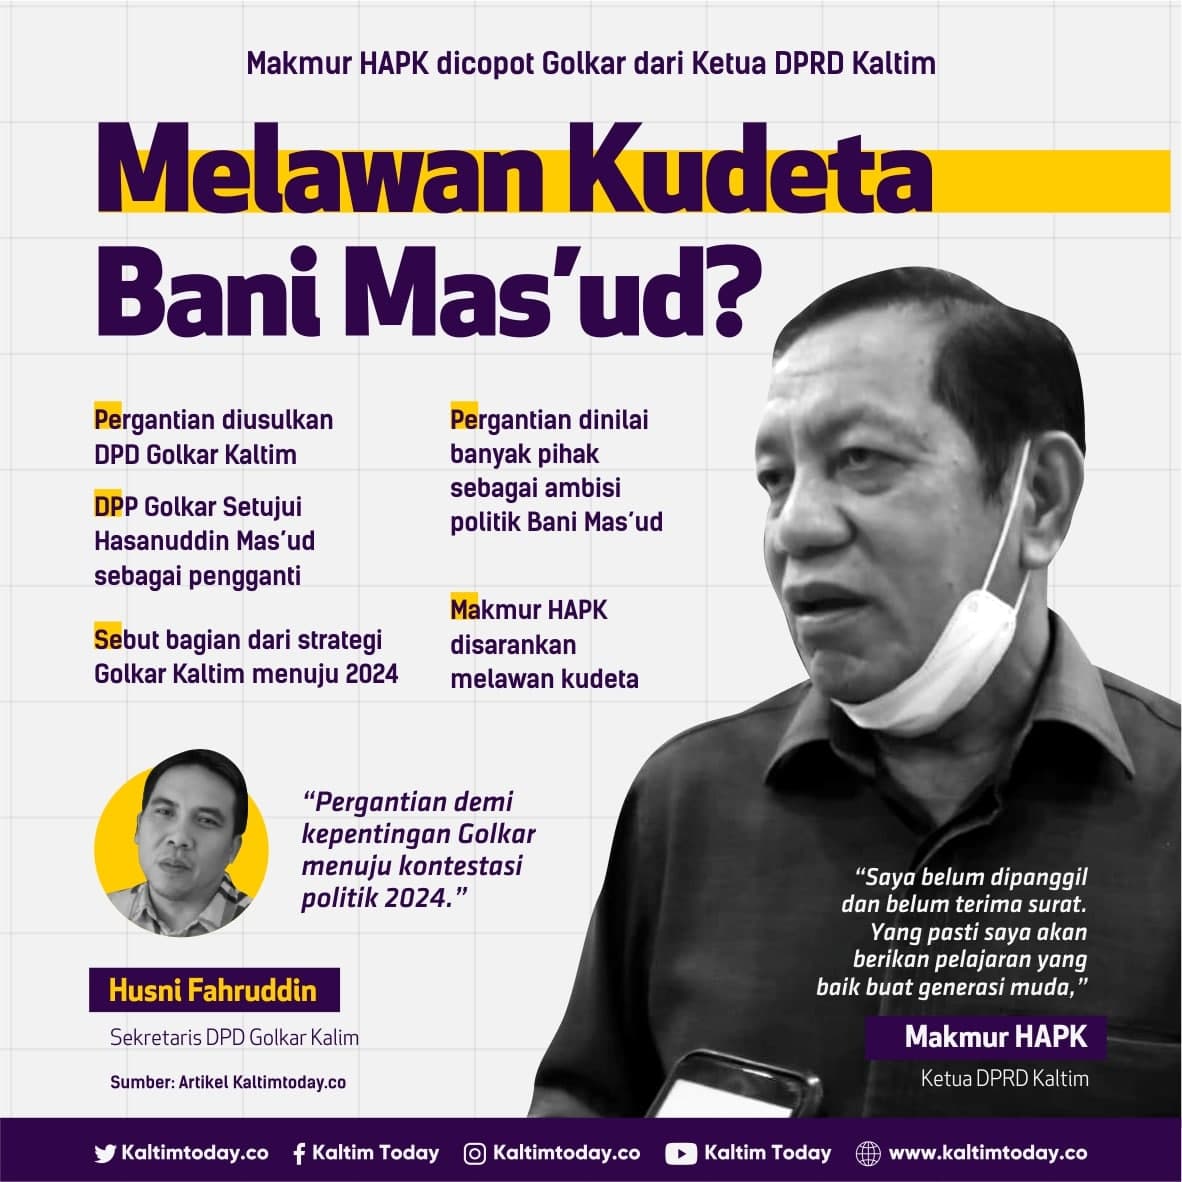 Infografis: Dicopot dari Ketua DPRD Kaltim, Makmur HAPK Bakal Lawan Upaya Kudeta Bani Mas'ud